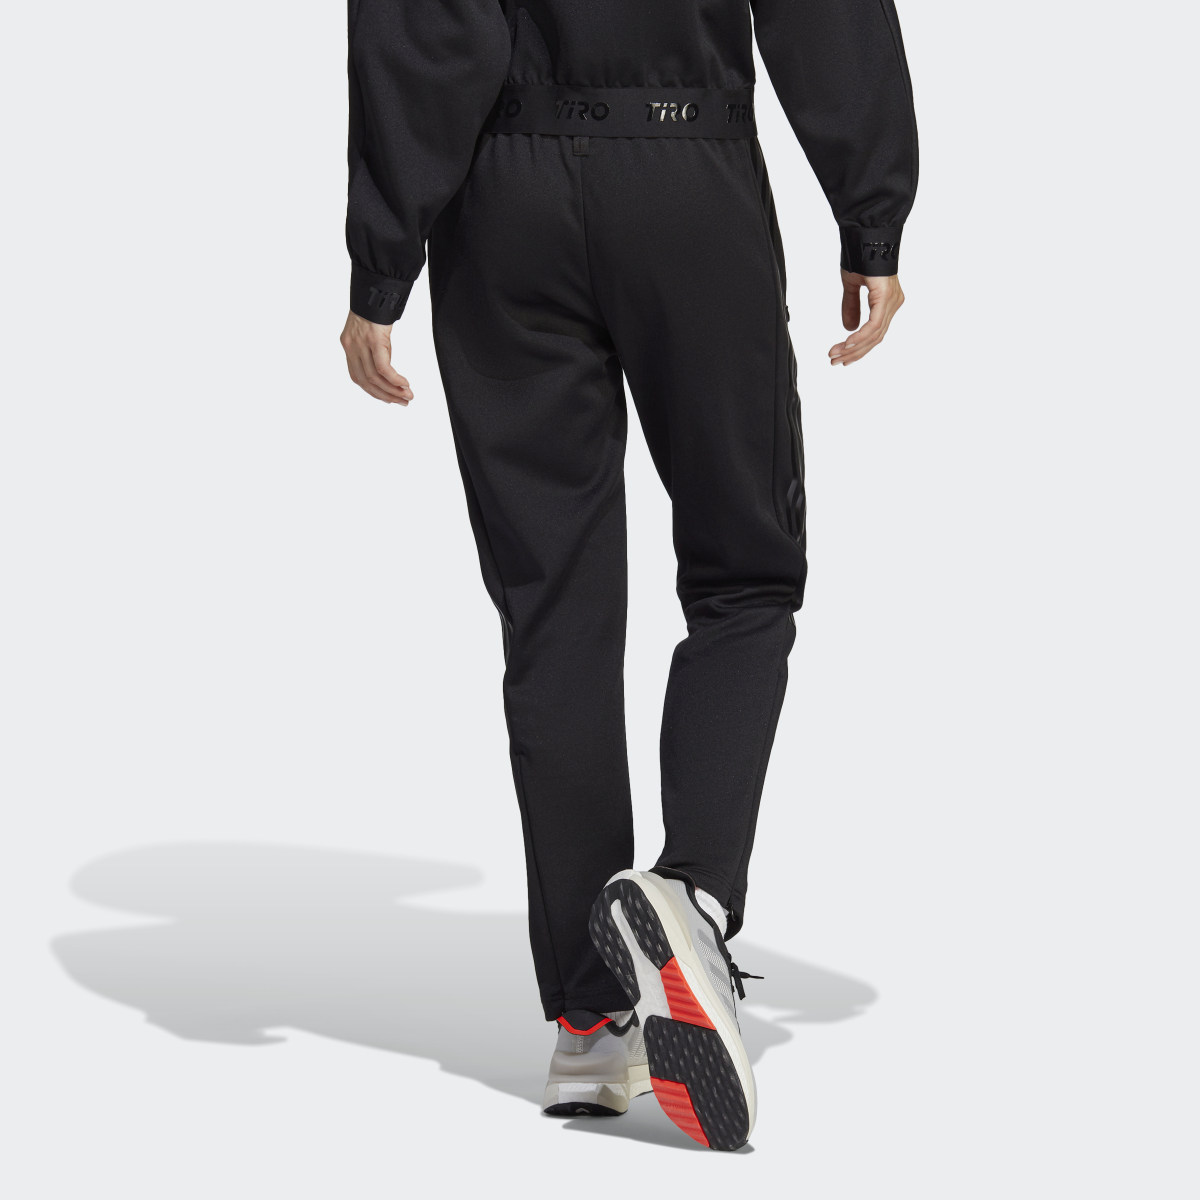 Adidas Tiro Suit-Up Advanced Tracksuit Bottoms. 5